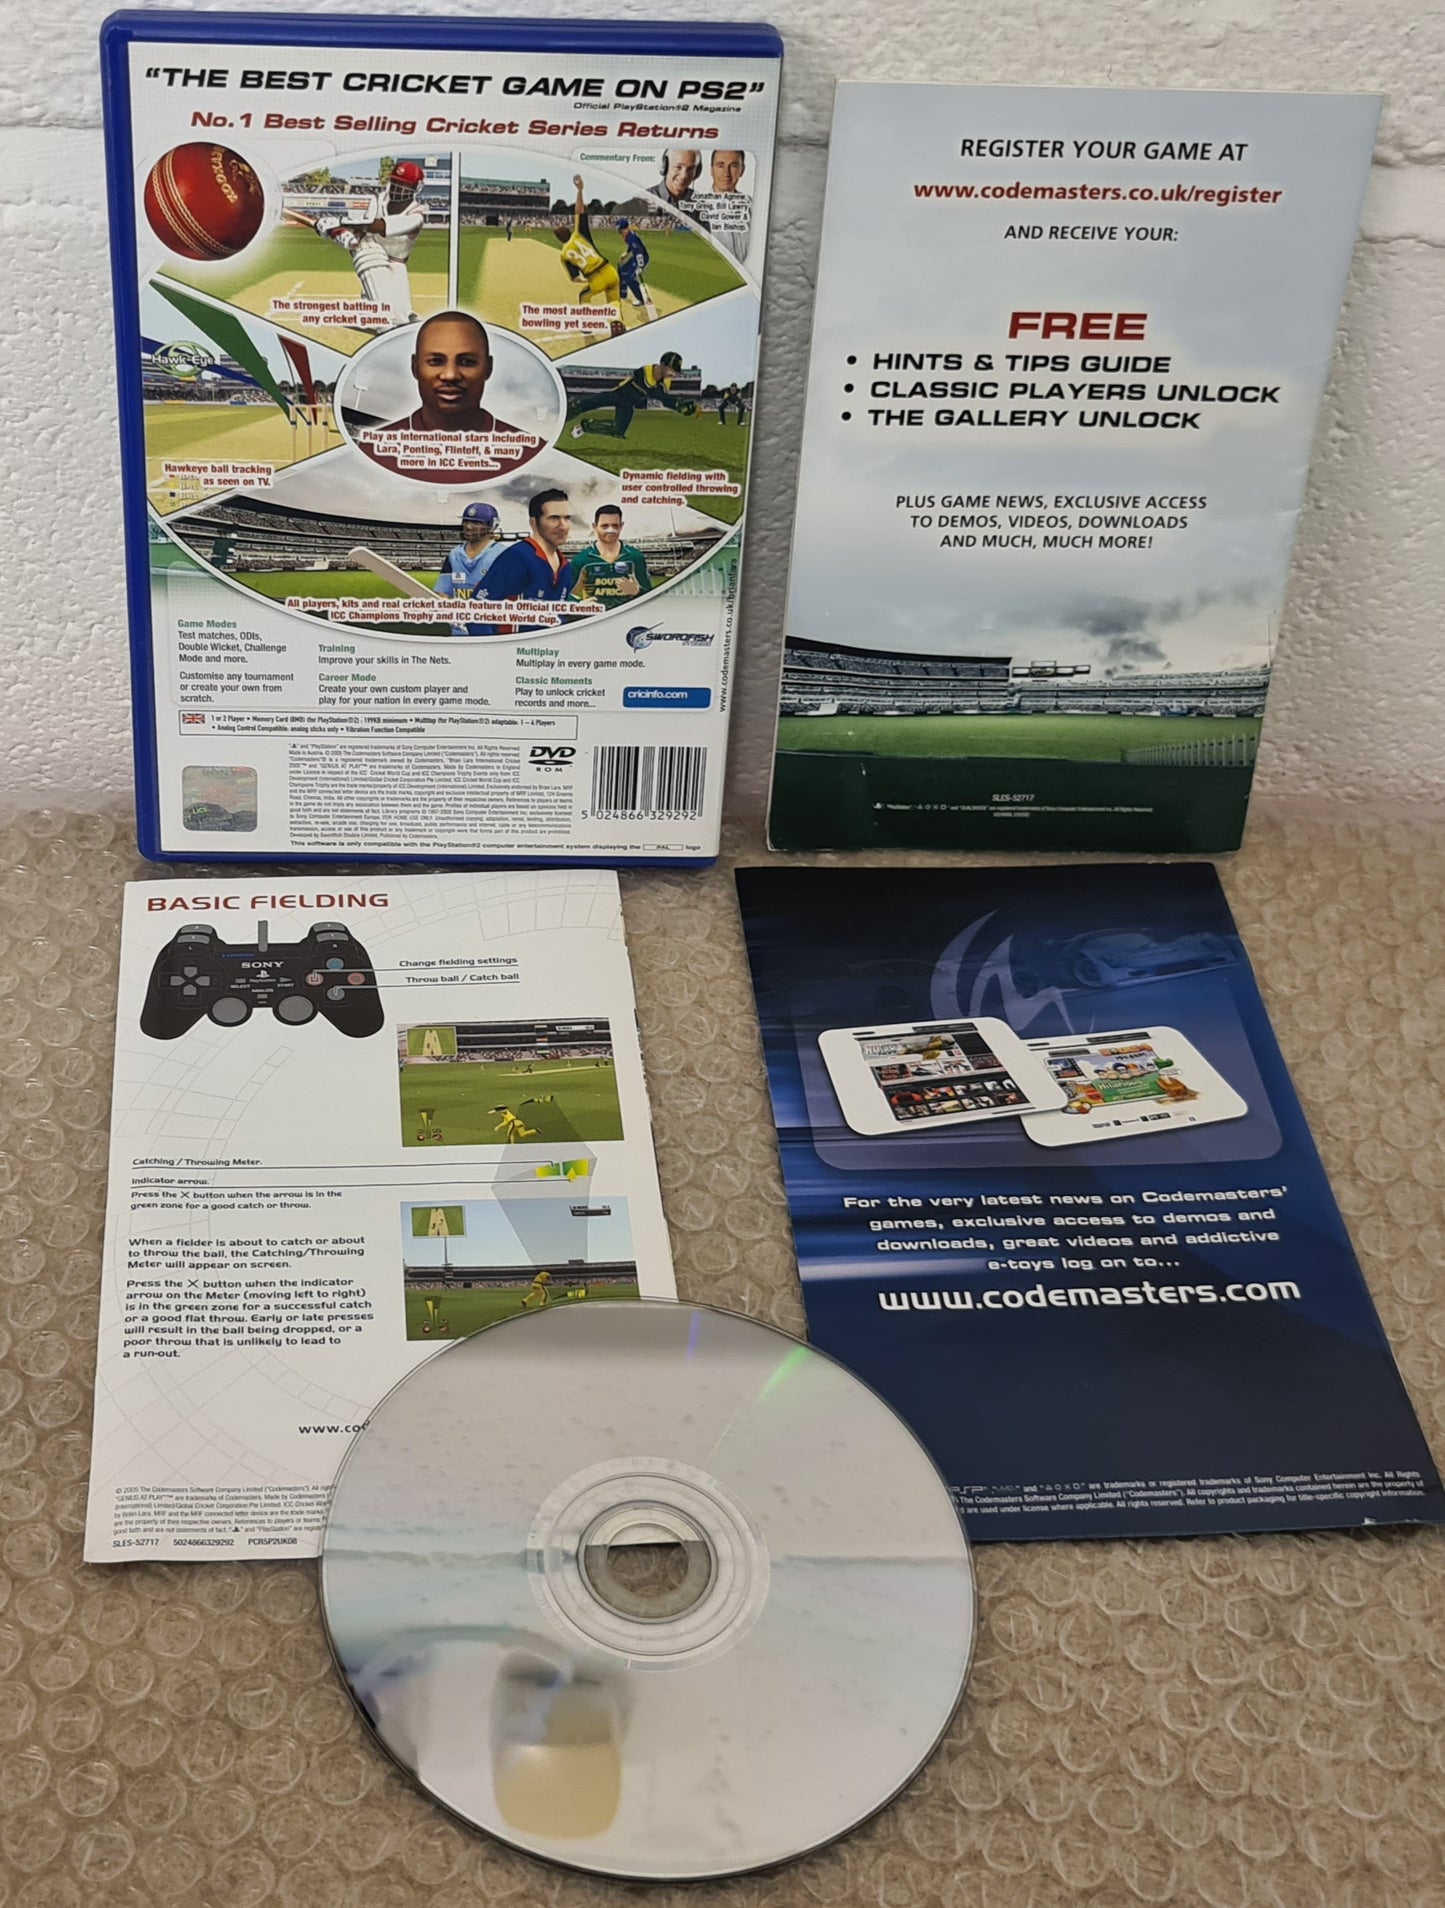 Brian Lara International Cricket 2005 Sony Playstation 2 (PS2) Game